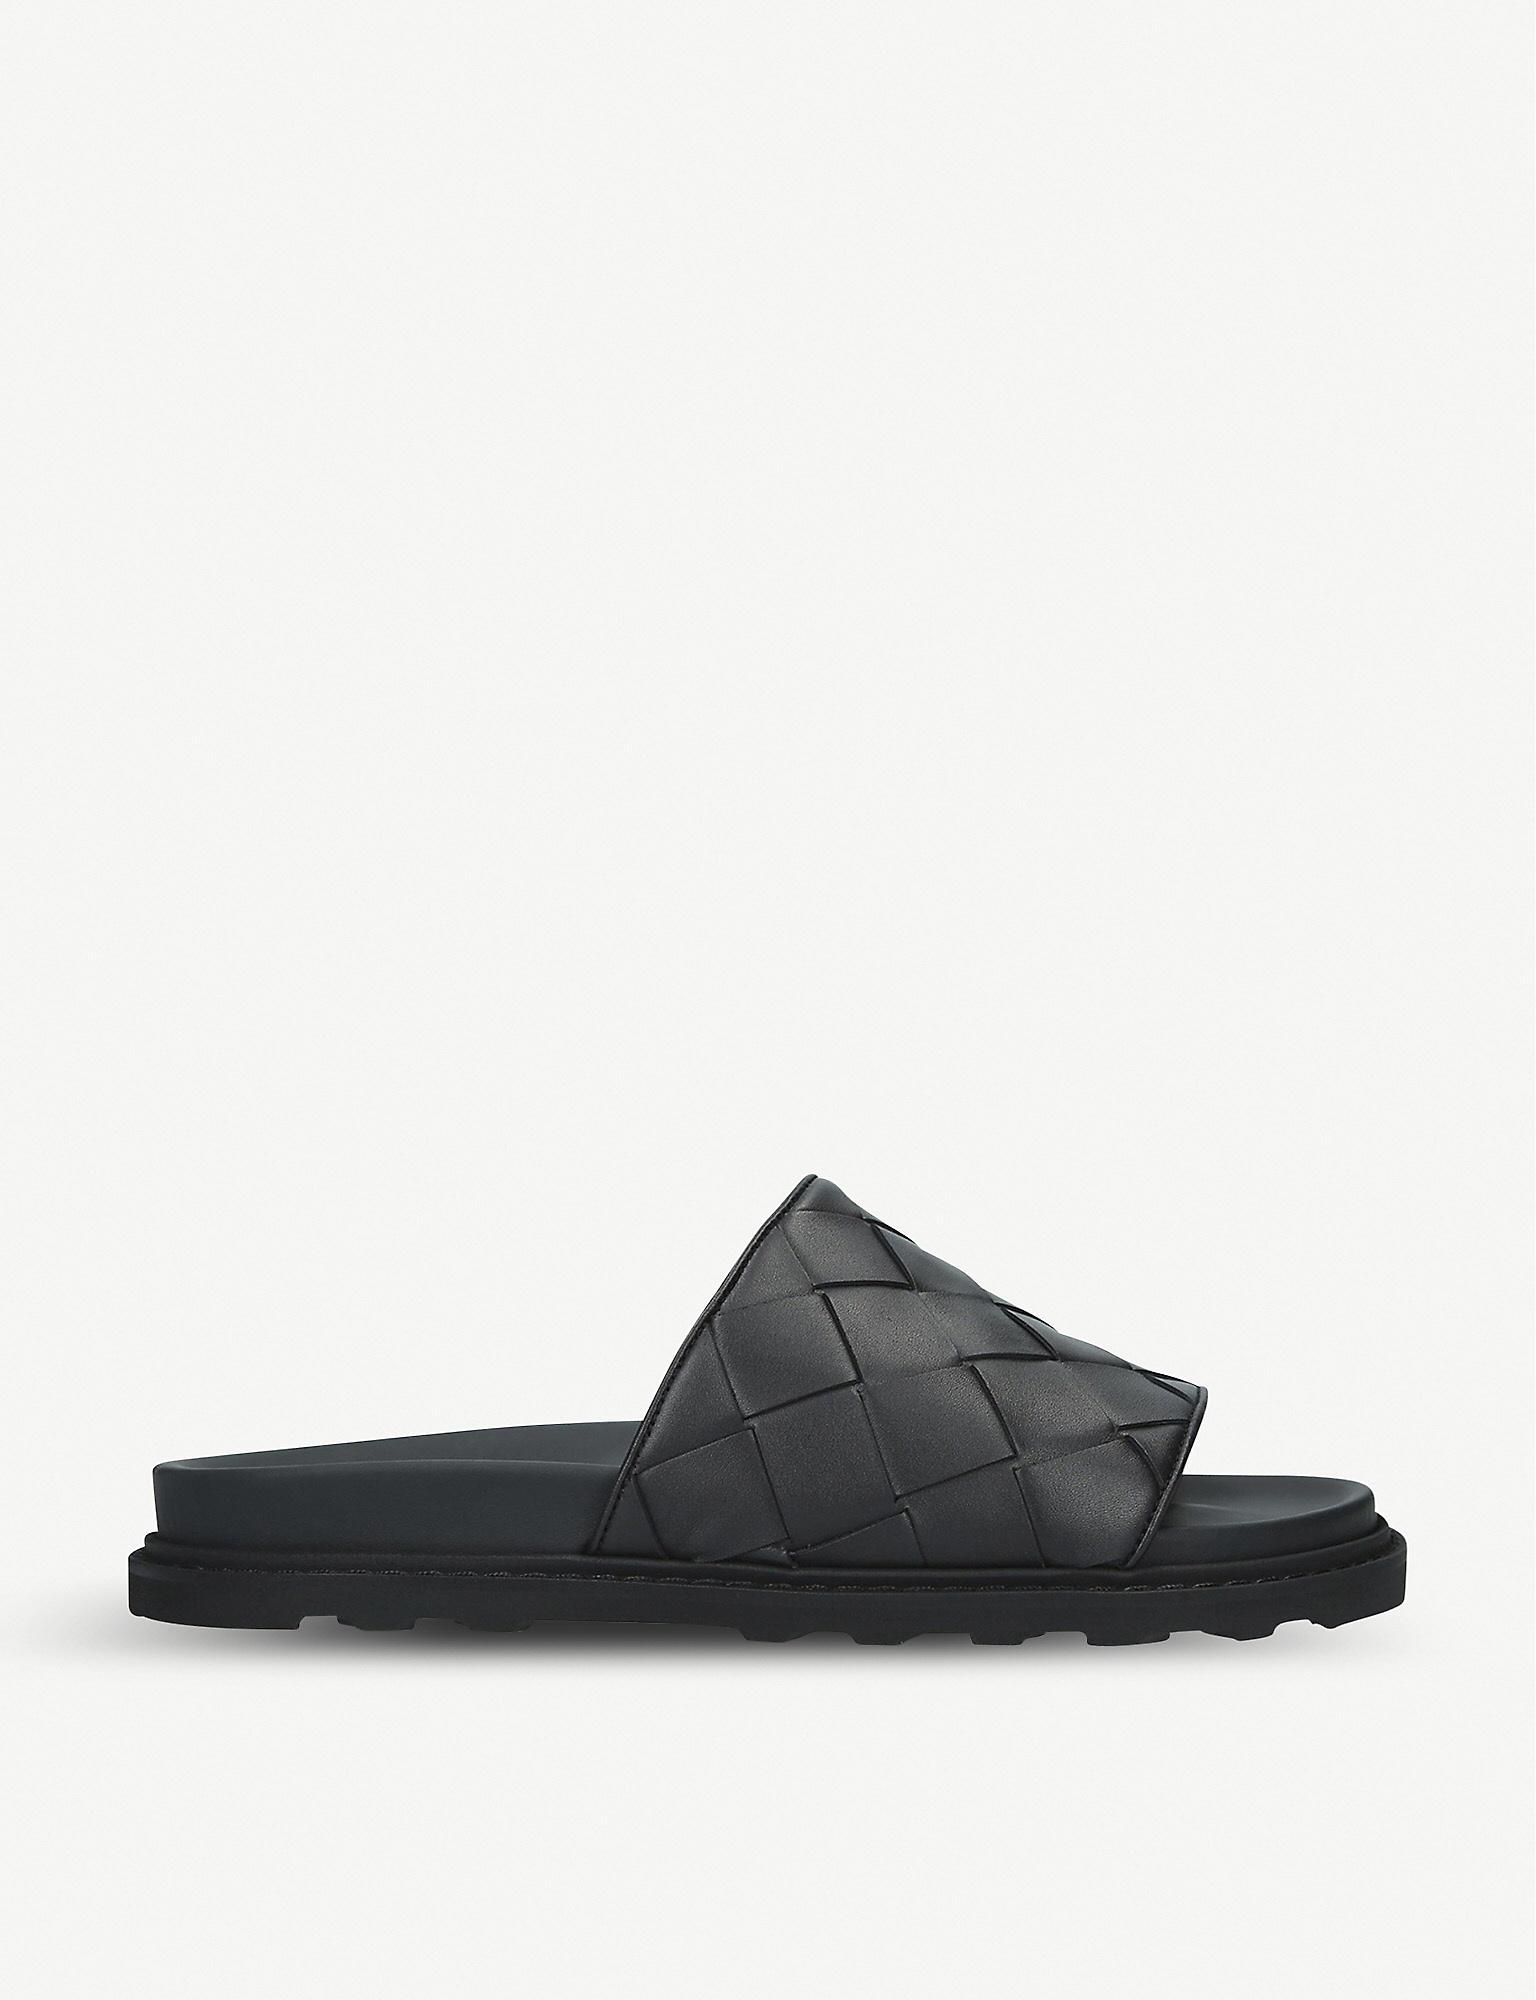 Bottega Veneta Intrecciato Leather Slider Sandals in Black for Men - Lyst